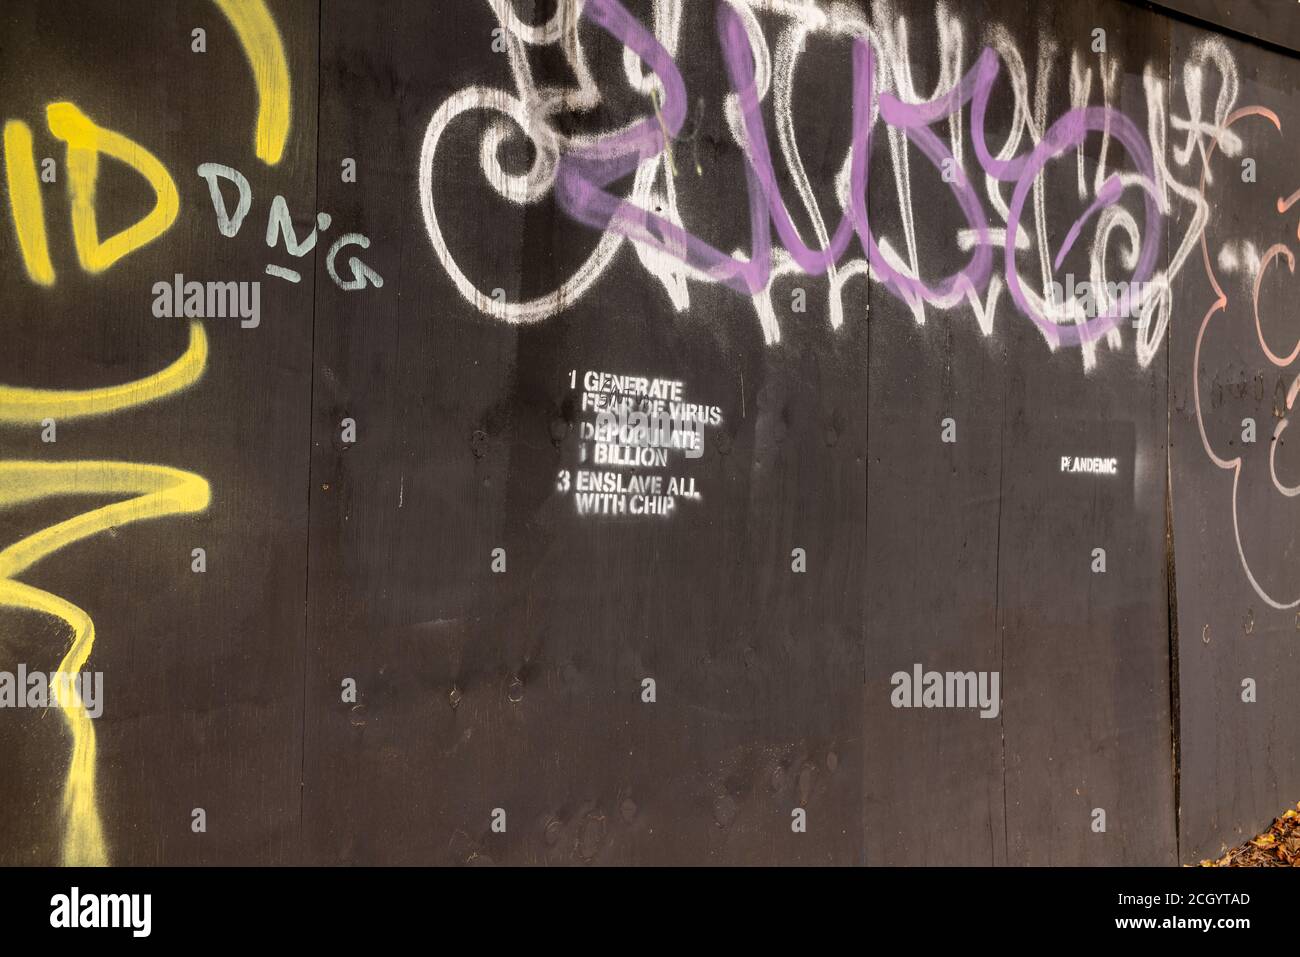 'Plandemic' Graffiti, Kirkstall Leeds West Yorkshire. Covid-19 Skeptiker versklaven alle mit Chip. Stockfoto